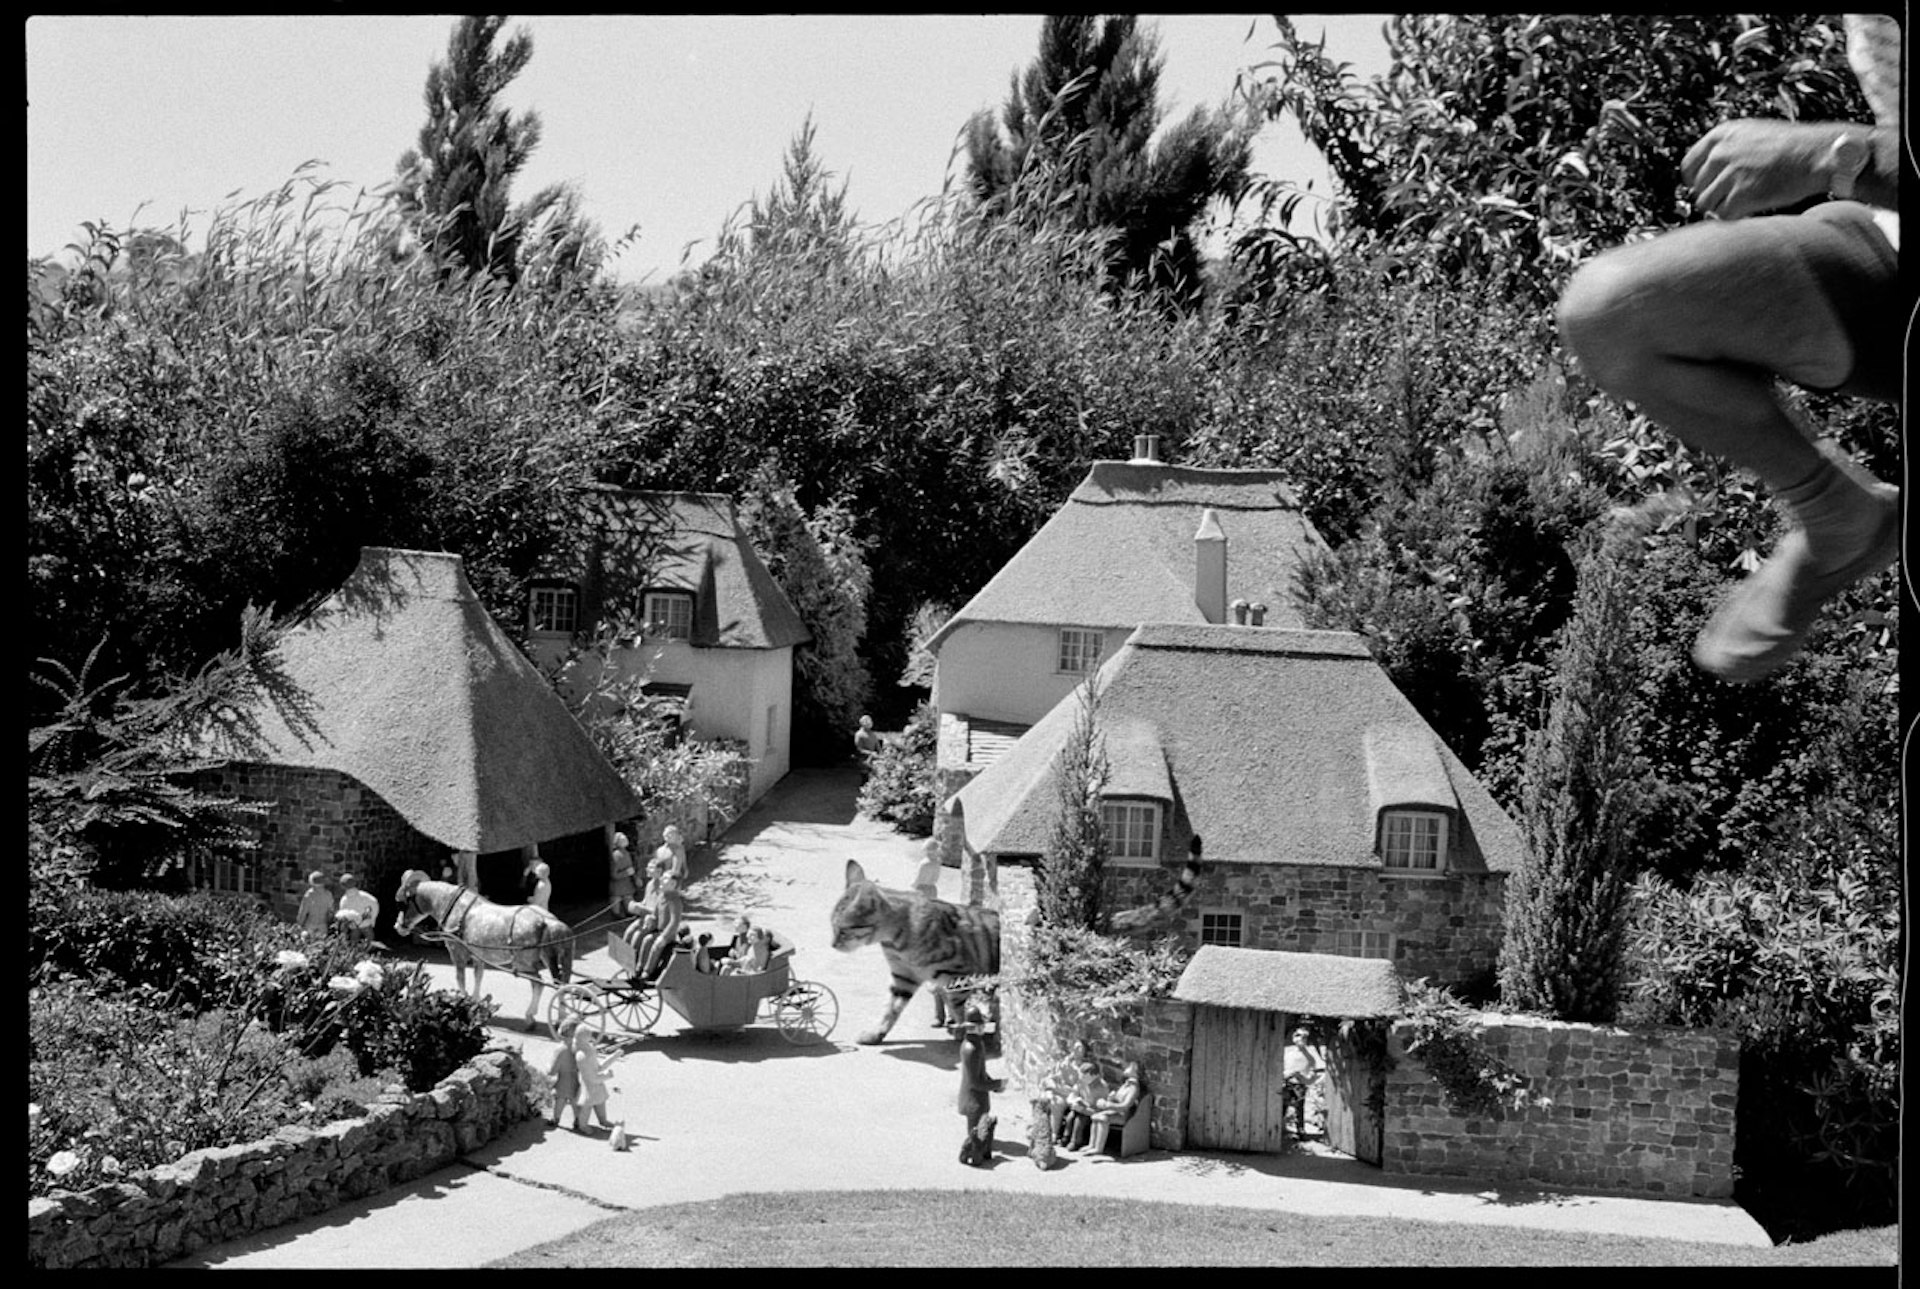 96_MBM_Miniature Village_(c) 1981 John Loengard